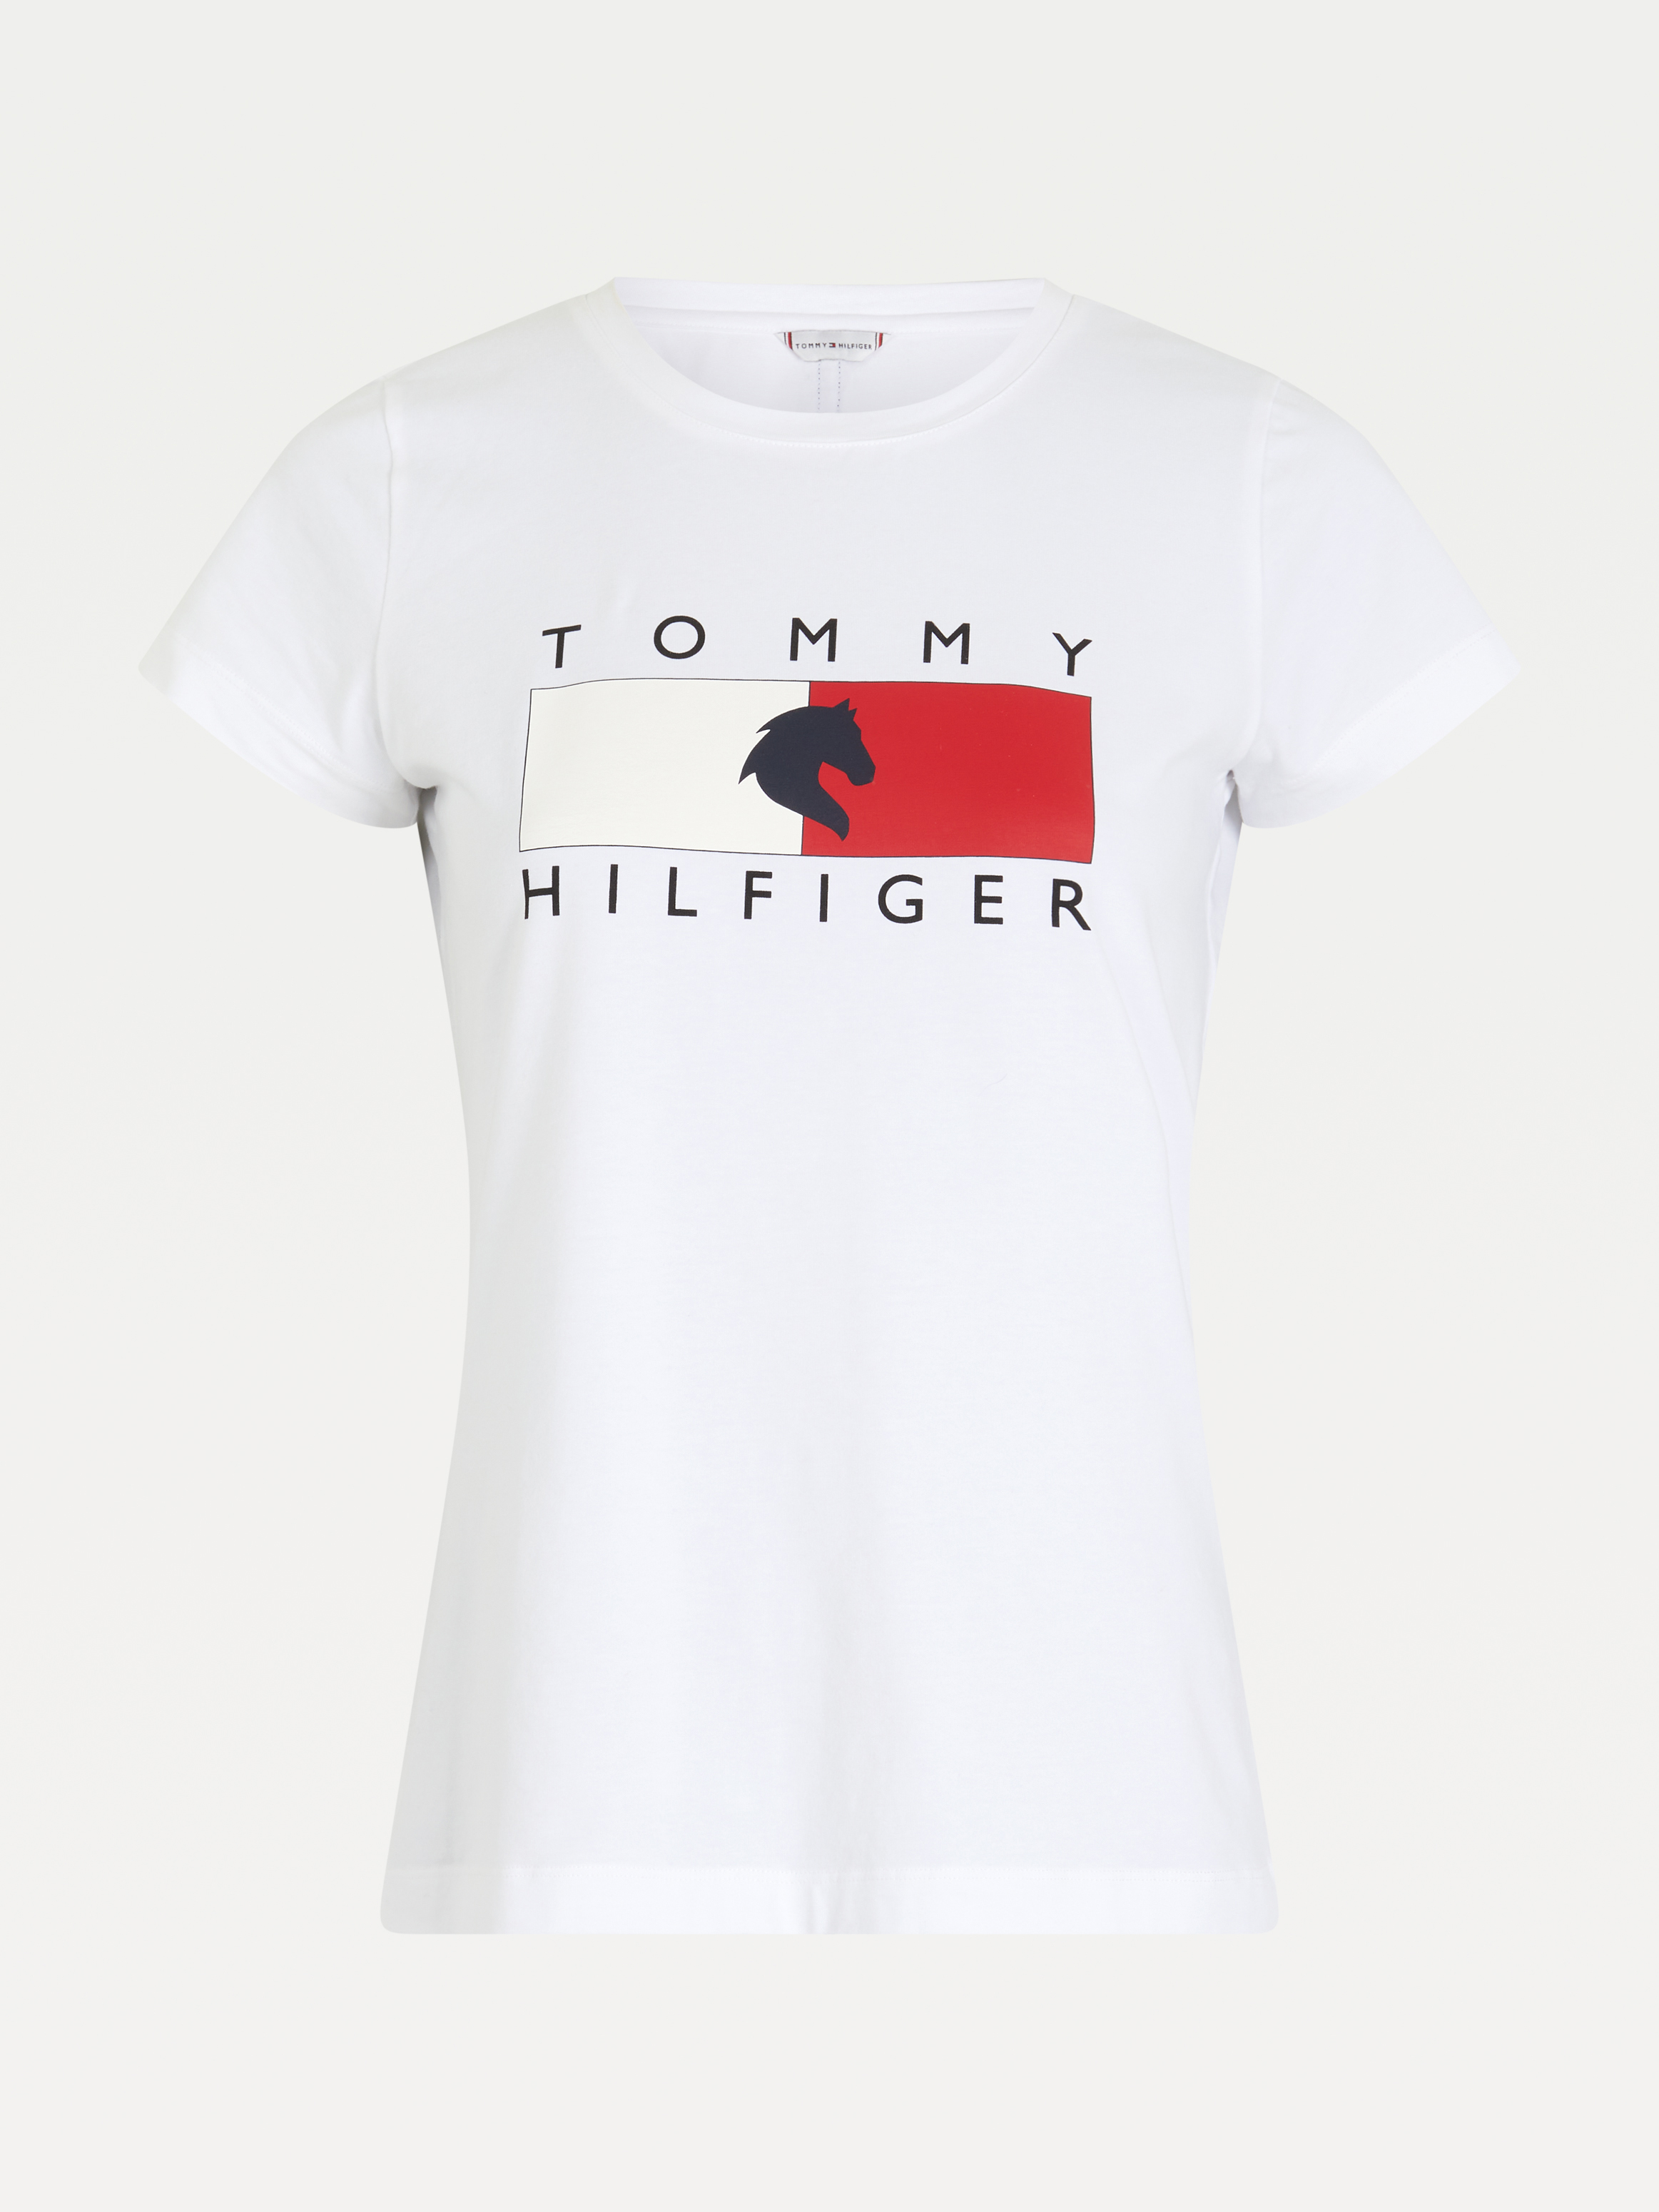    TOMMY HILFIGER ()